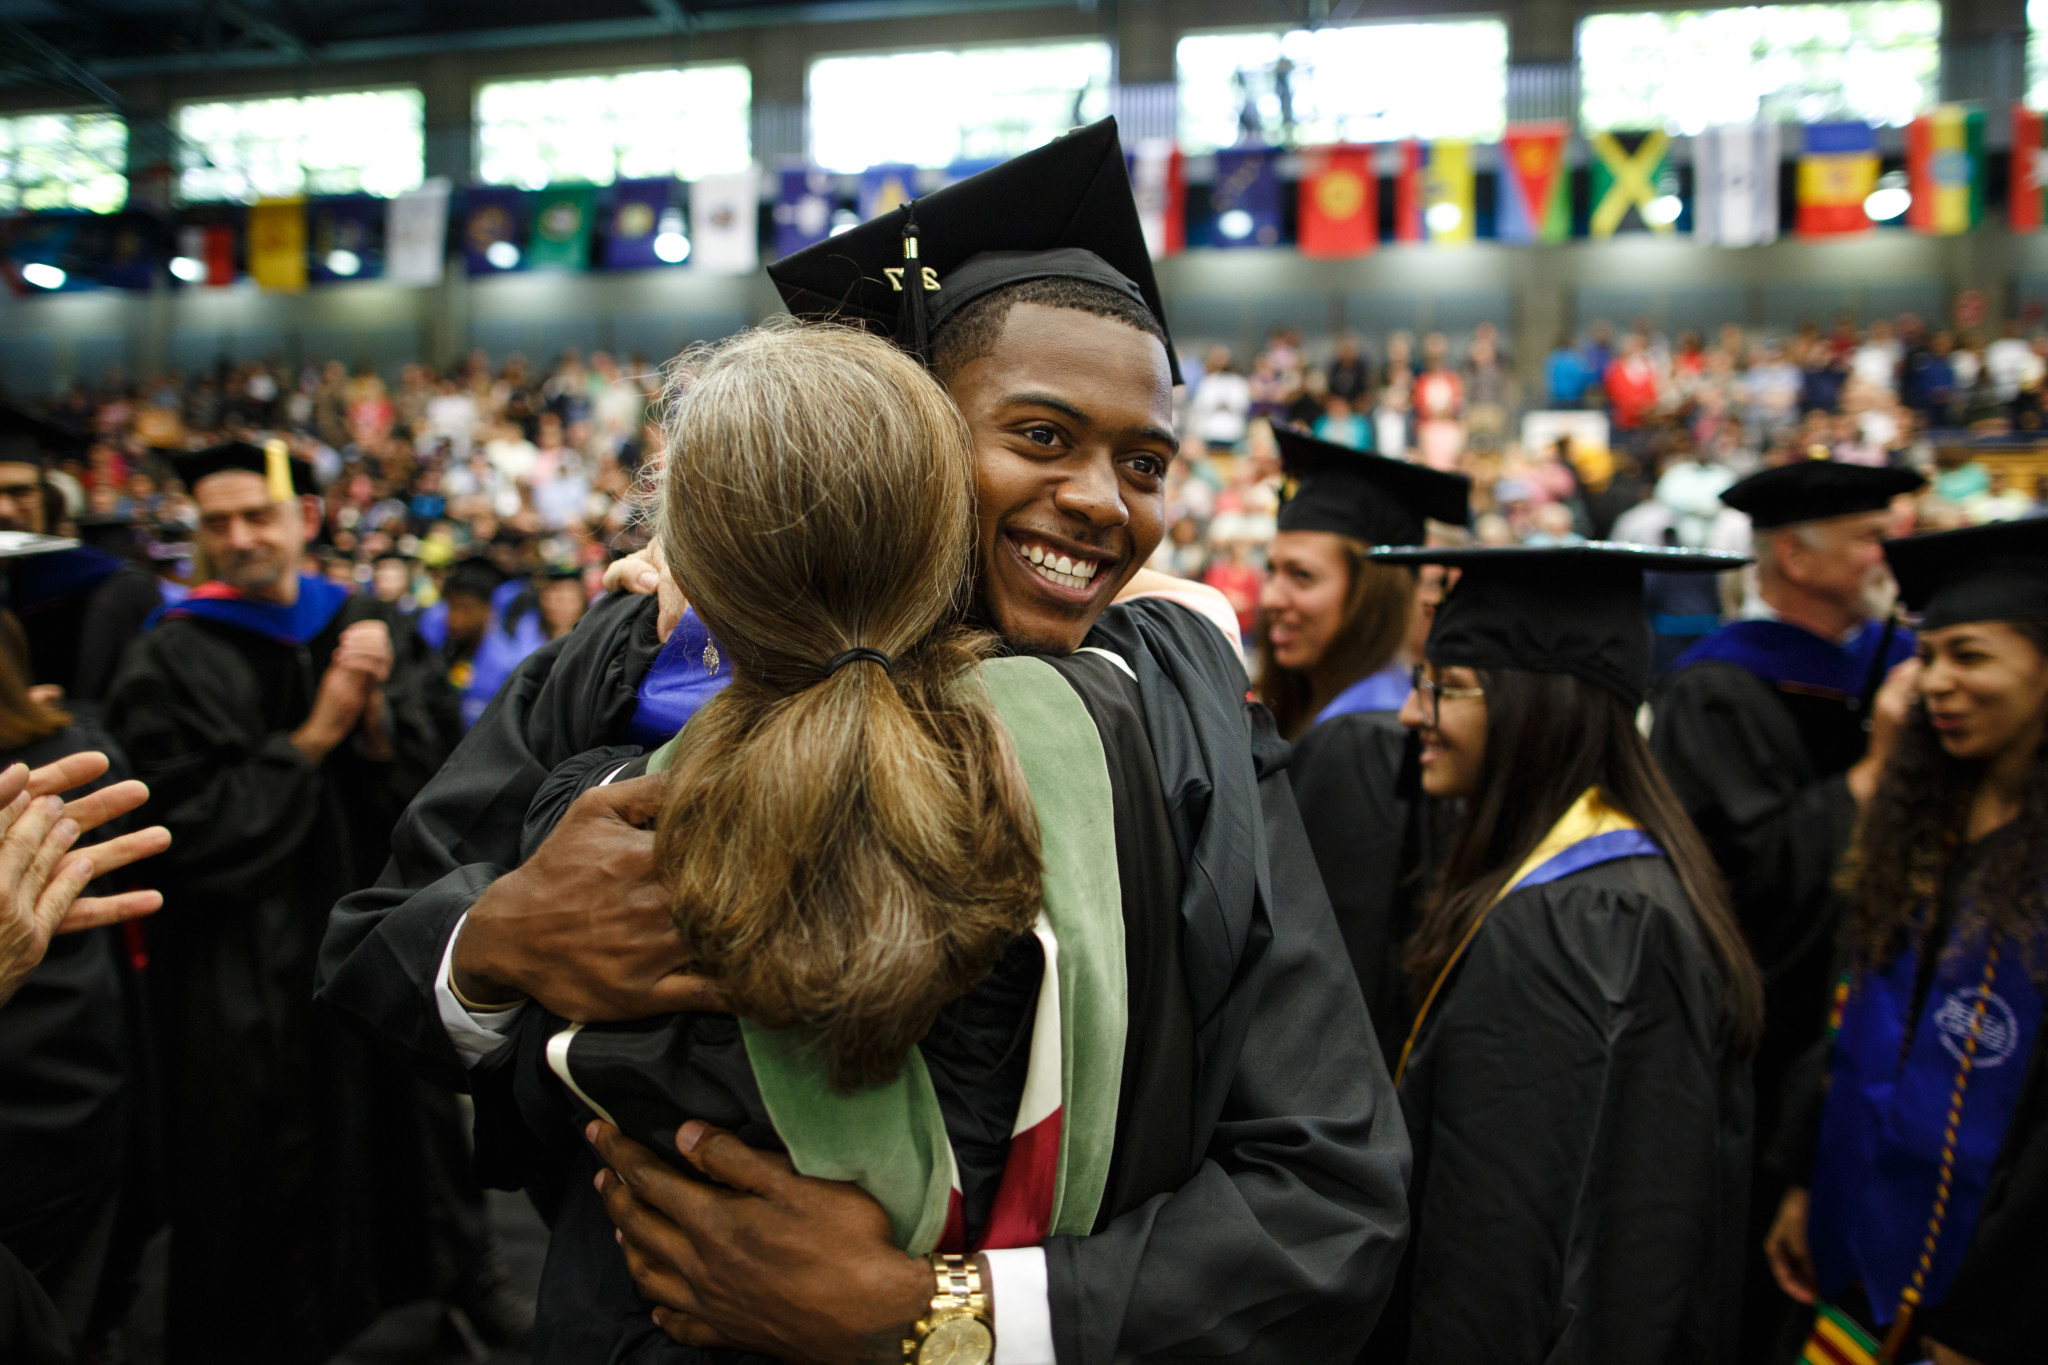 A recent graduate gives someone a hug